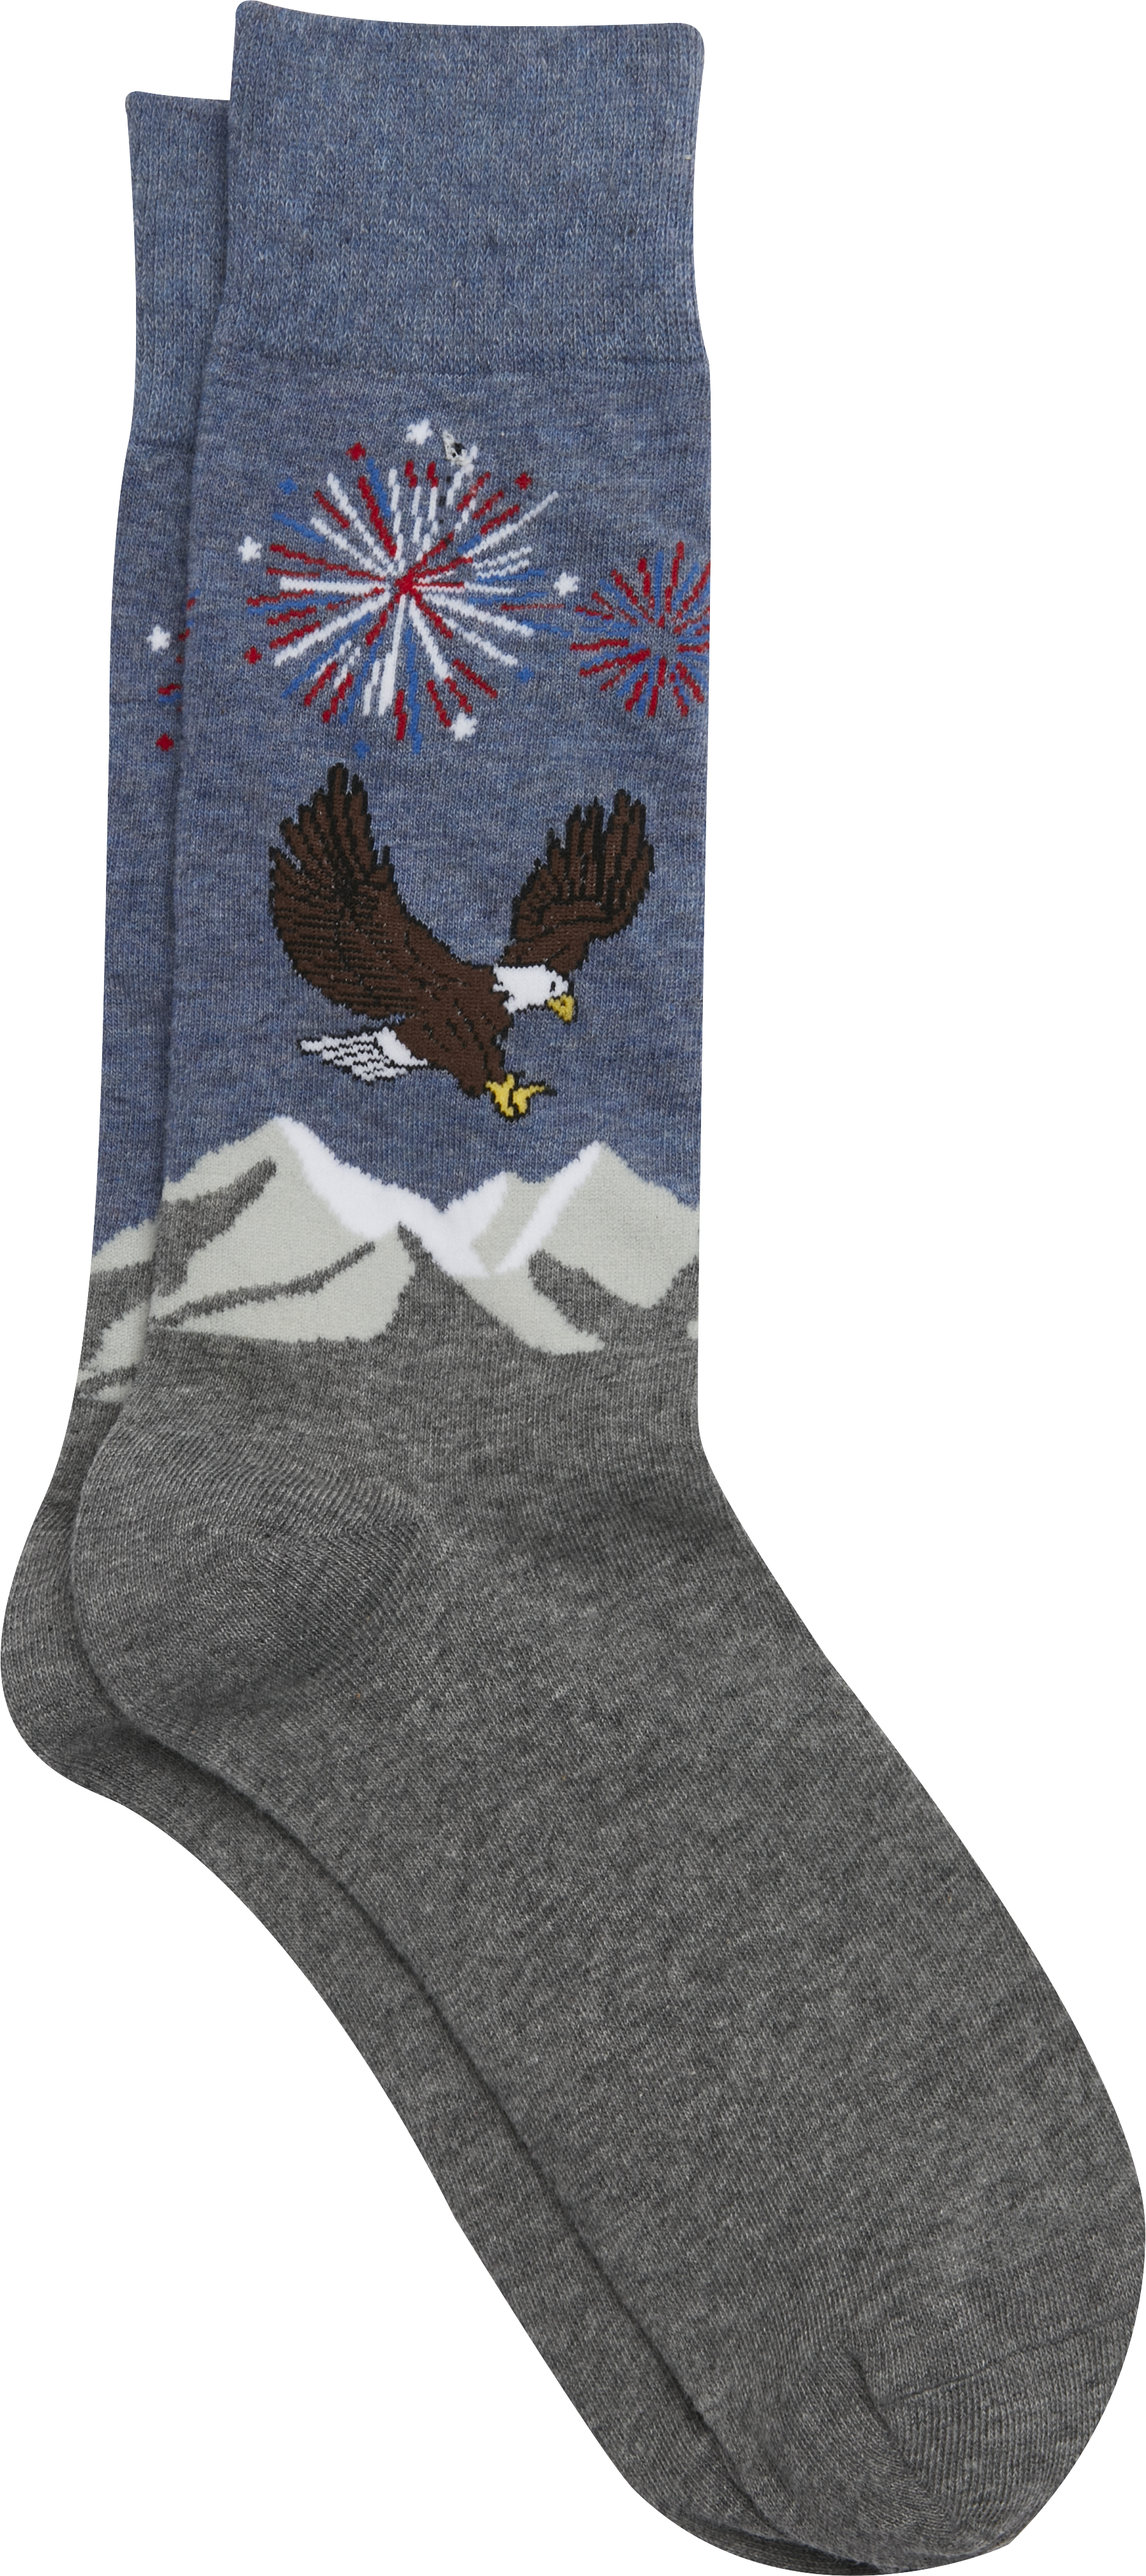 Eagle Socks